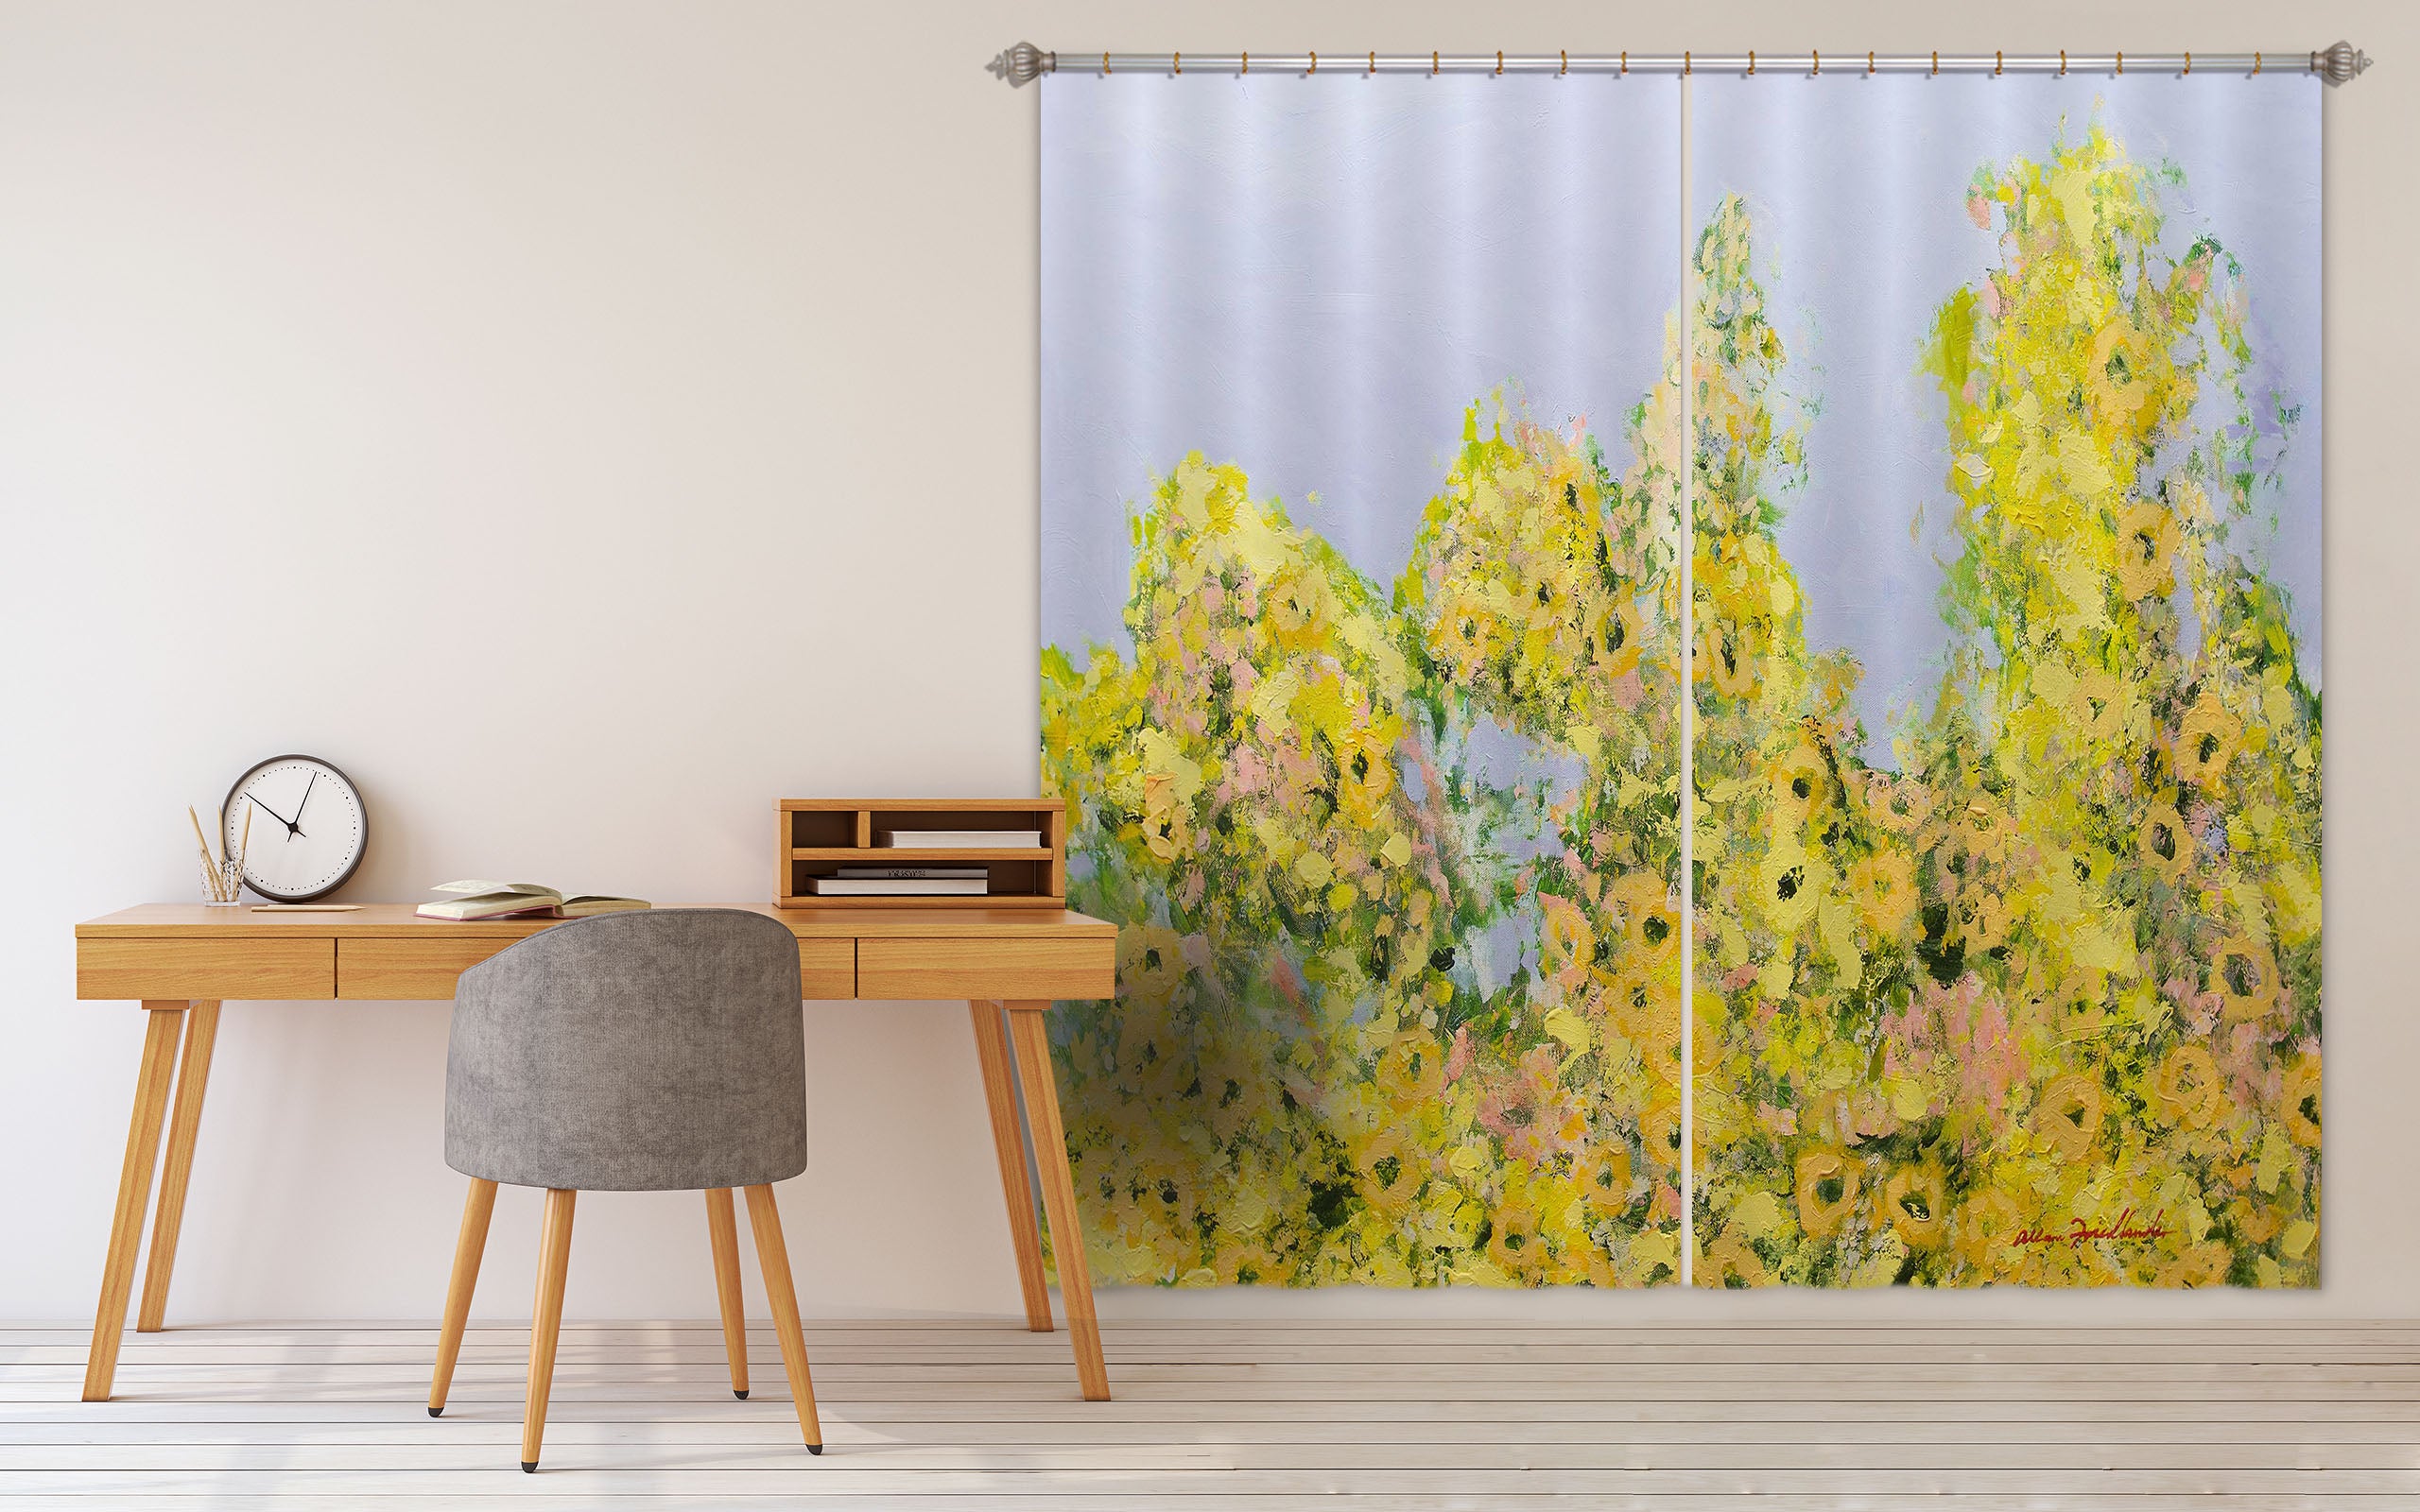 3D Canola Flower 268 Allan P. Friedlander Curtain Curtains Drapes